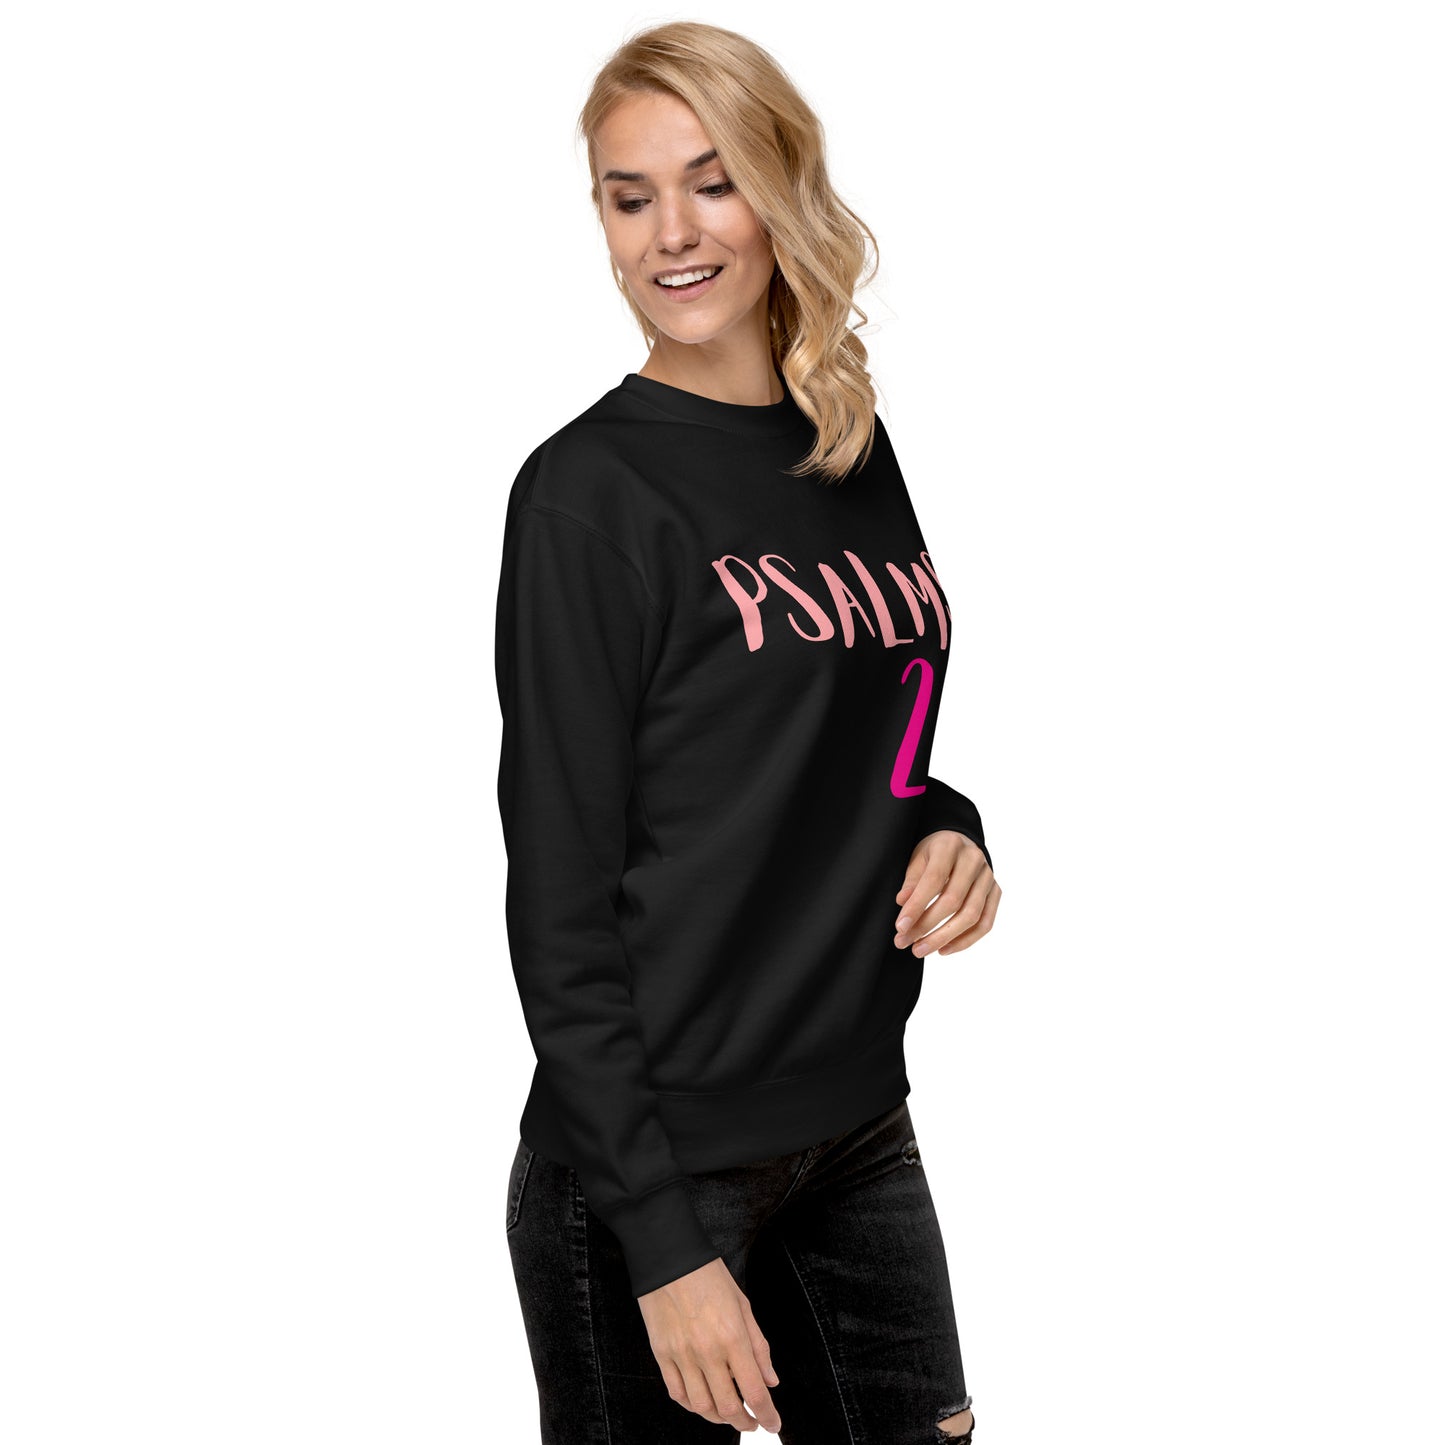 ‘Psalms 24’ Unisex Premium Sweatshirt